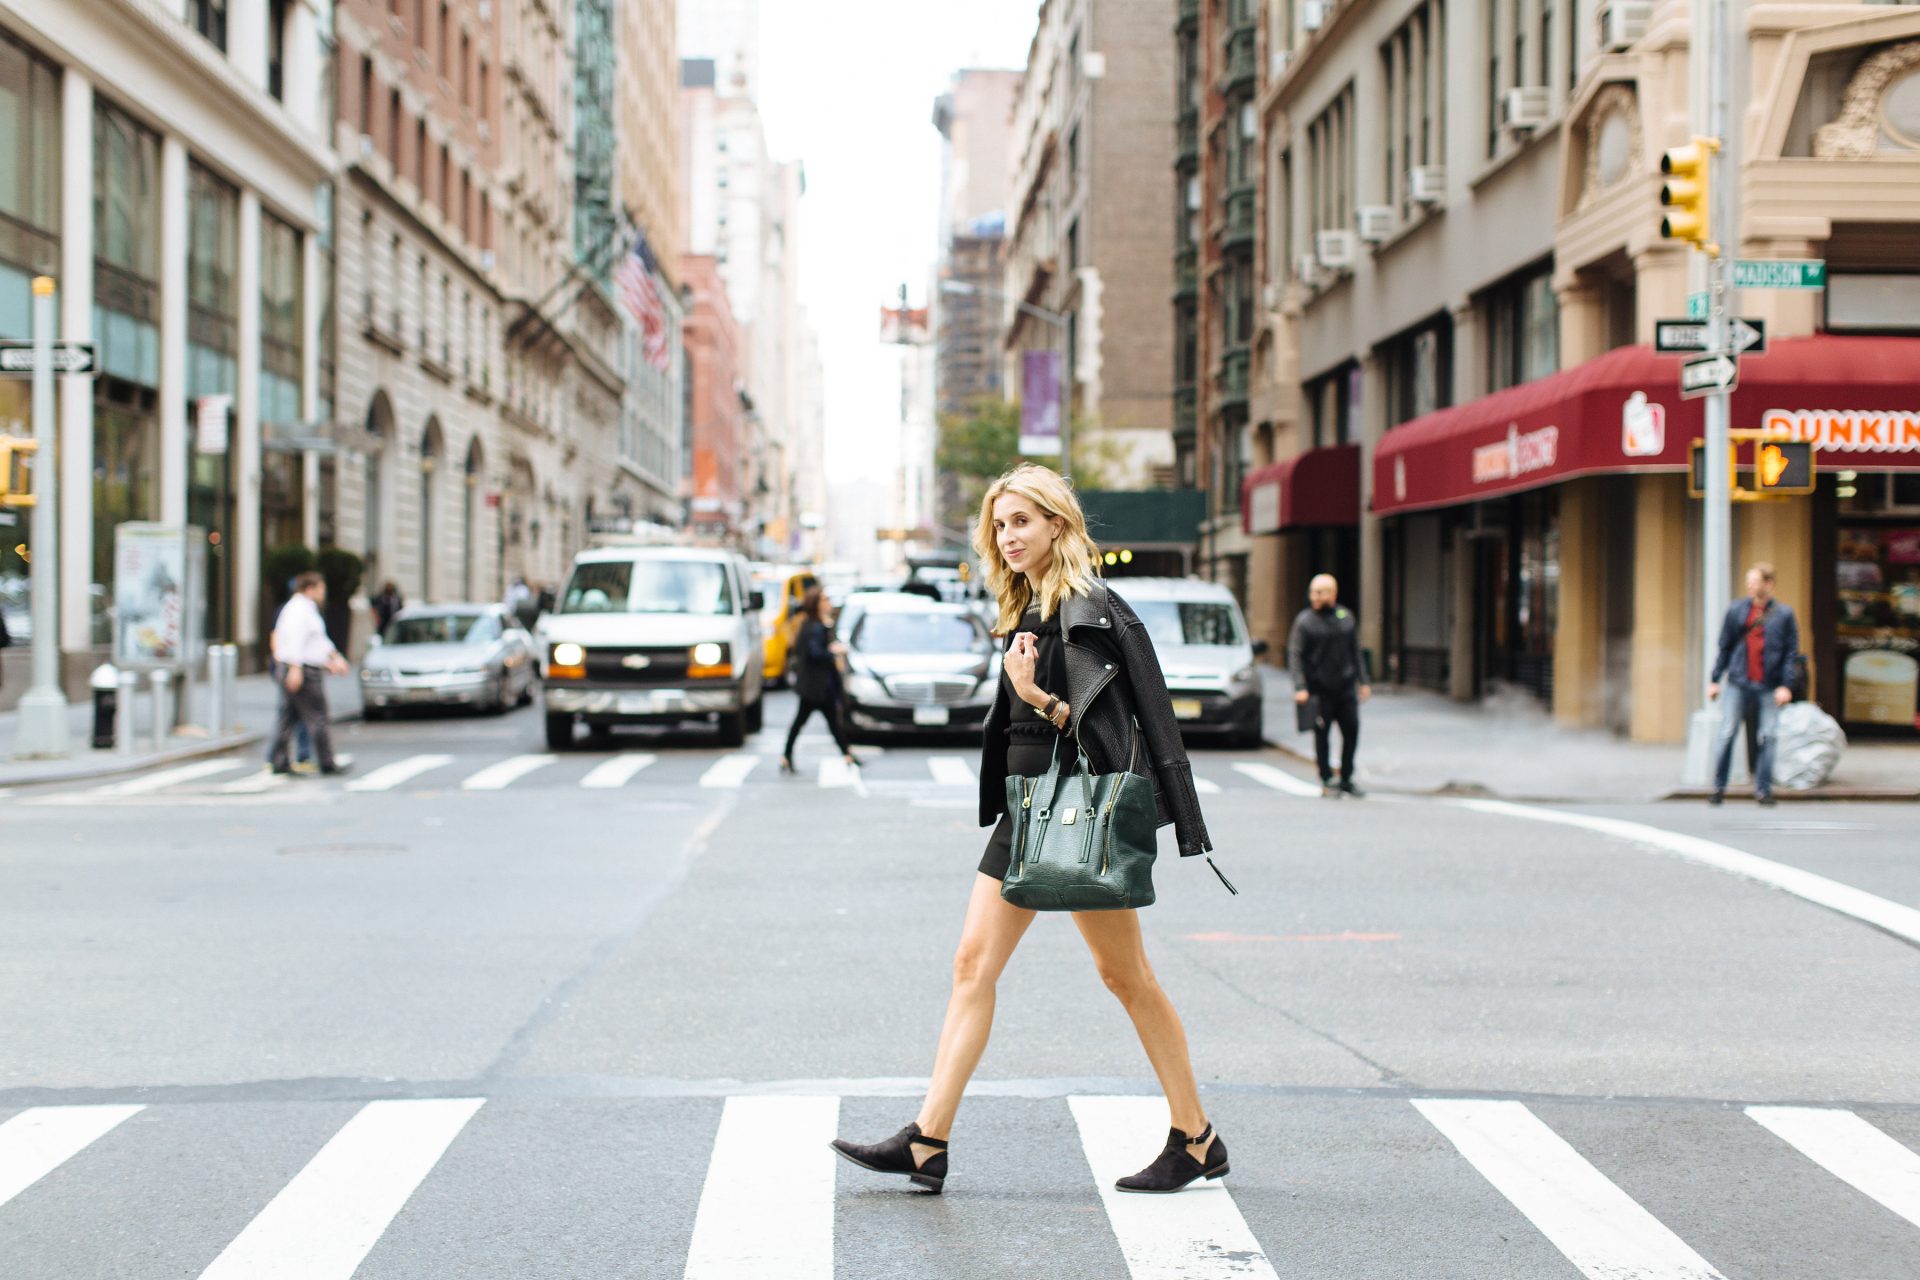  Katia Beauchamp crossing a city street at a crosswalk 